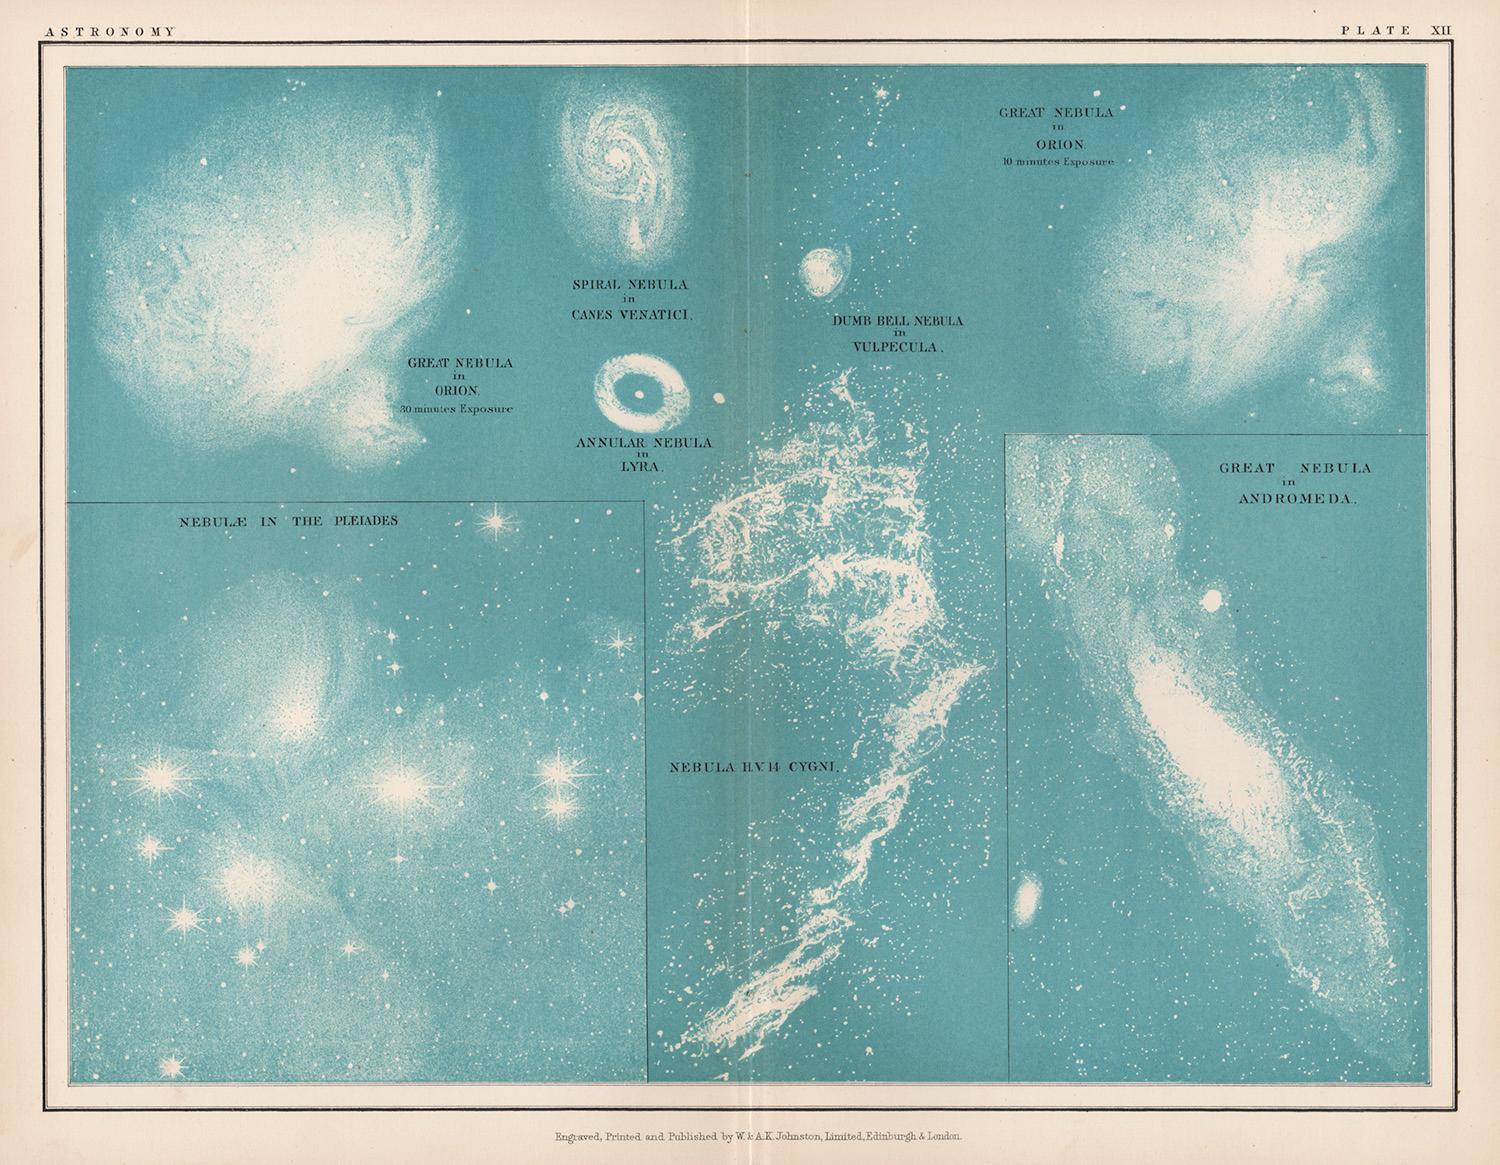 Alexander Keith Johnston Abstract Print - Nebulae, antique astronomy science diagram illustration print